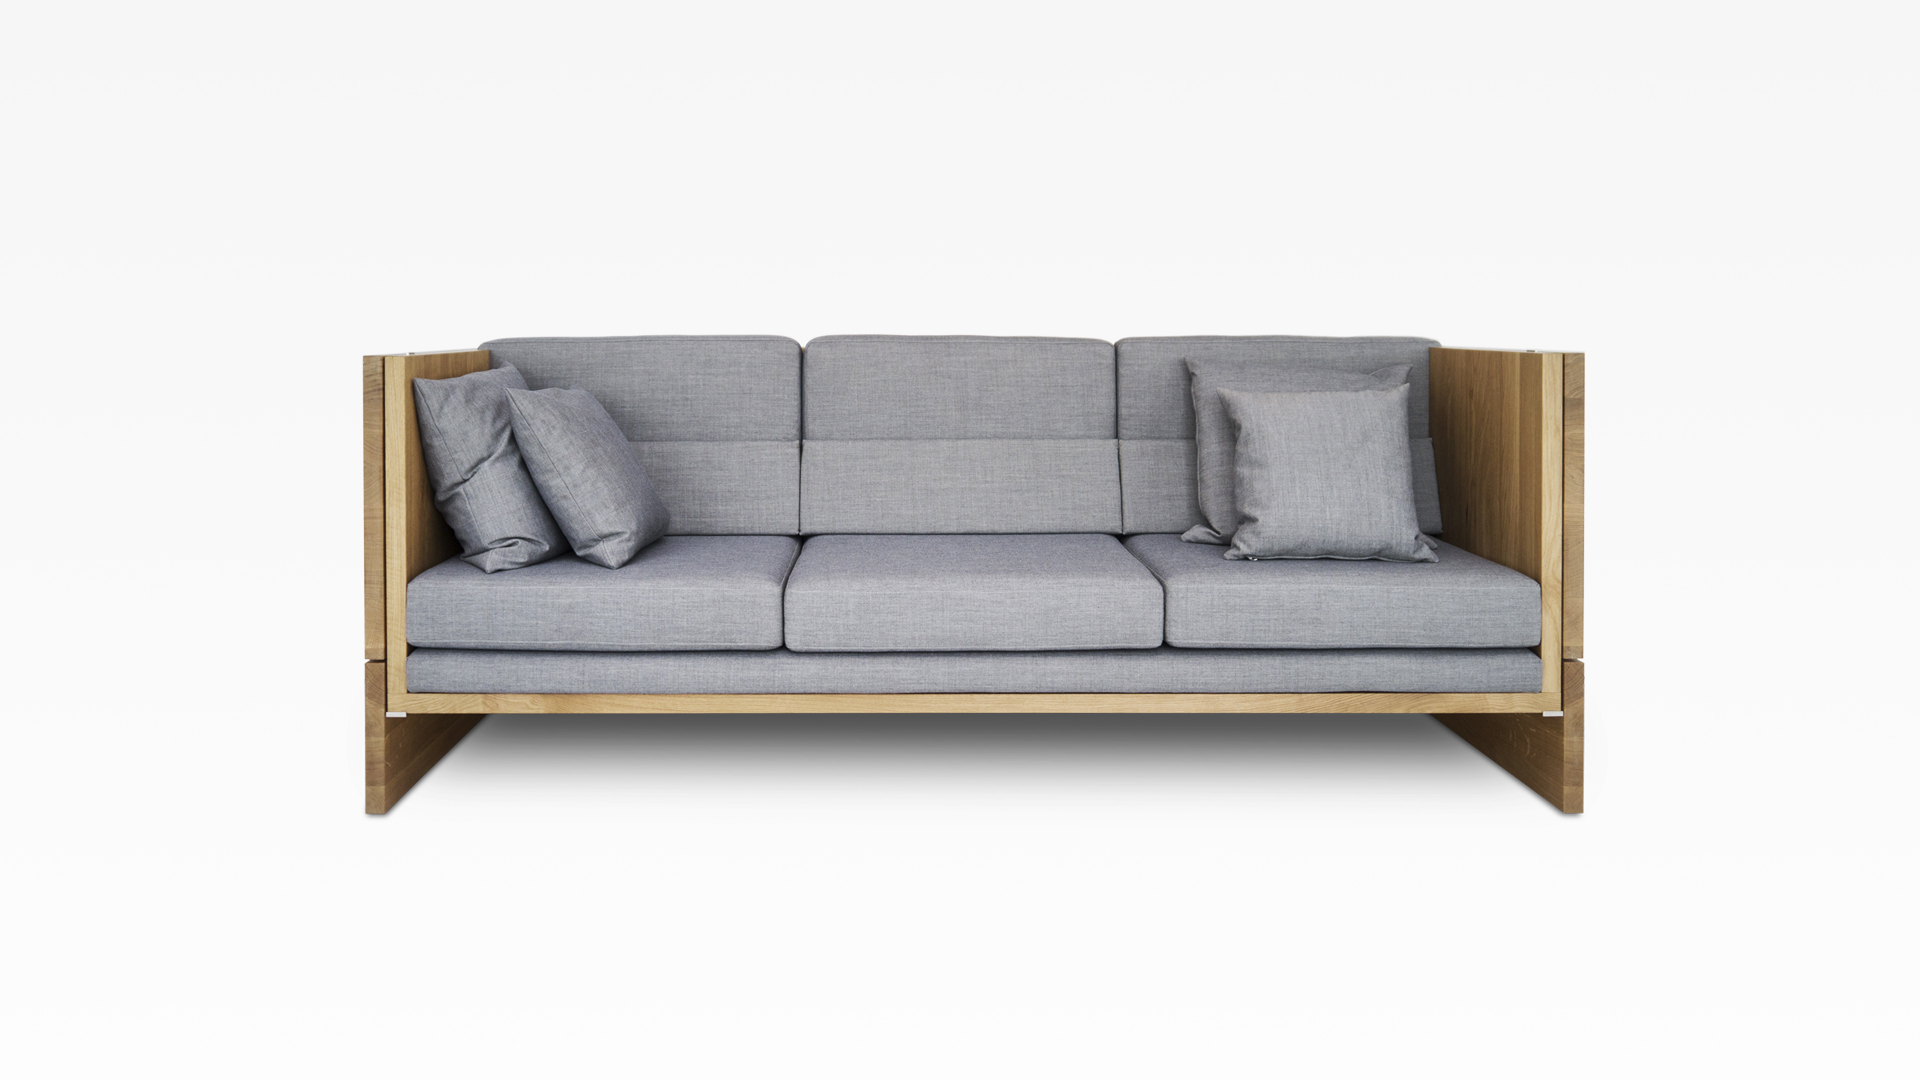 Deutsu Furniture Design Store Munich Wayo Sofa Can Be